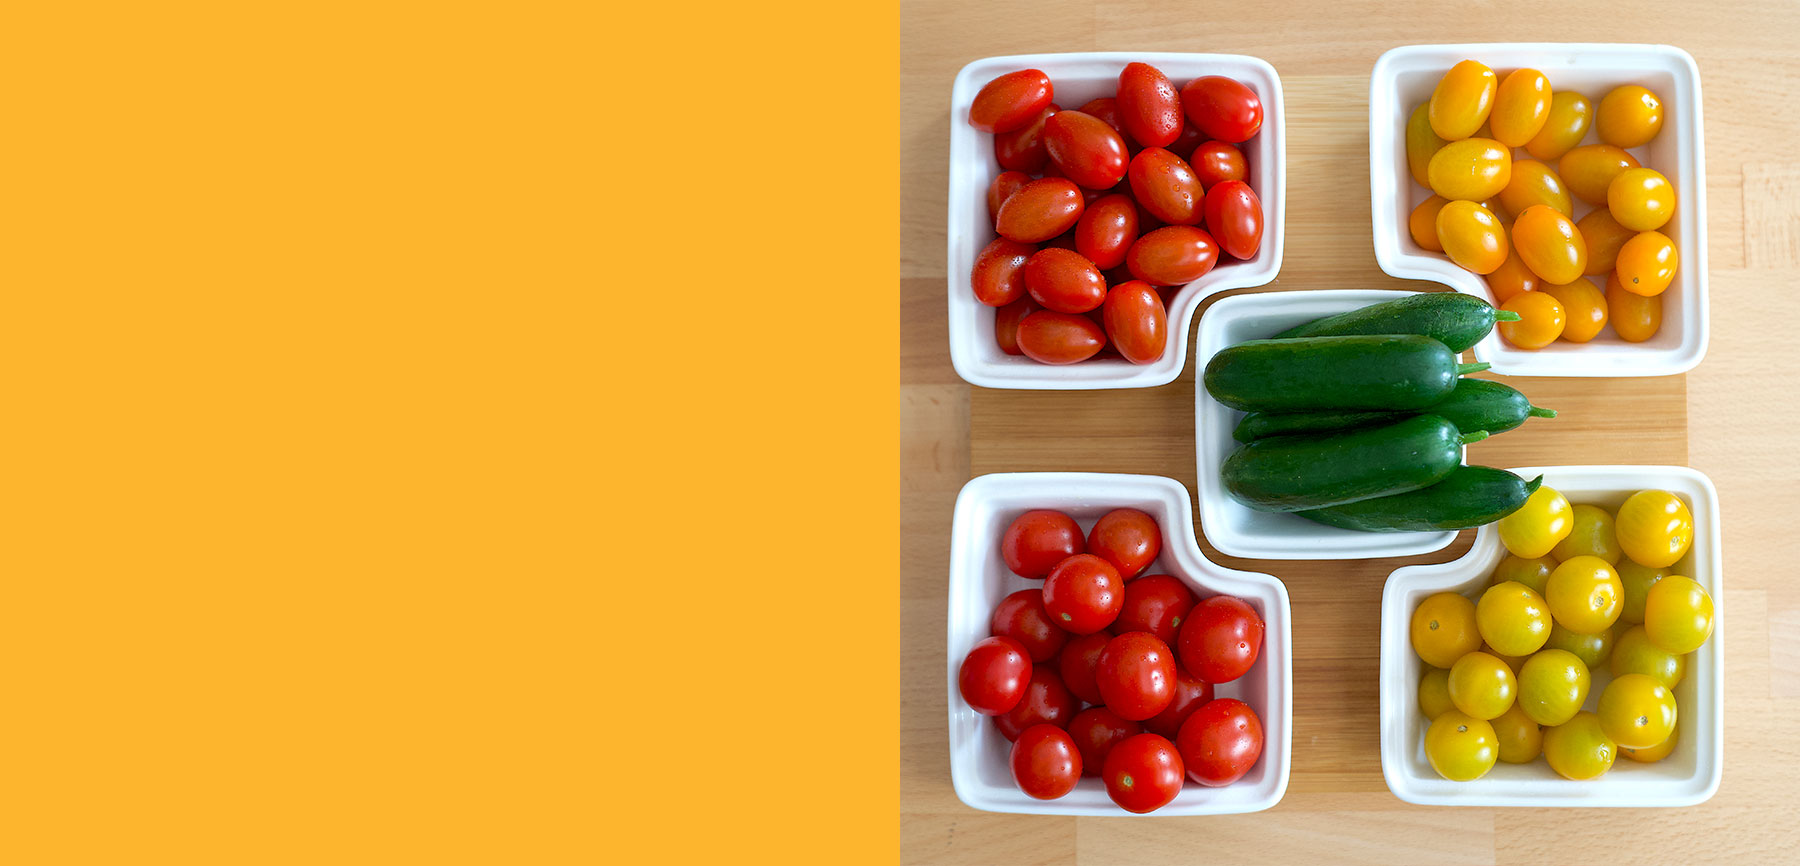 Hydroponics Product, Tomatoes